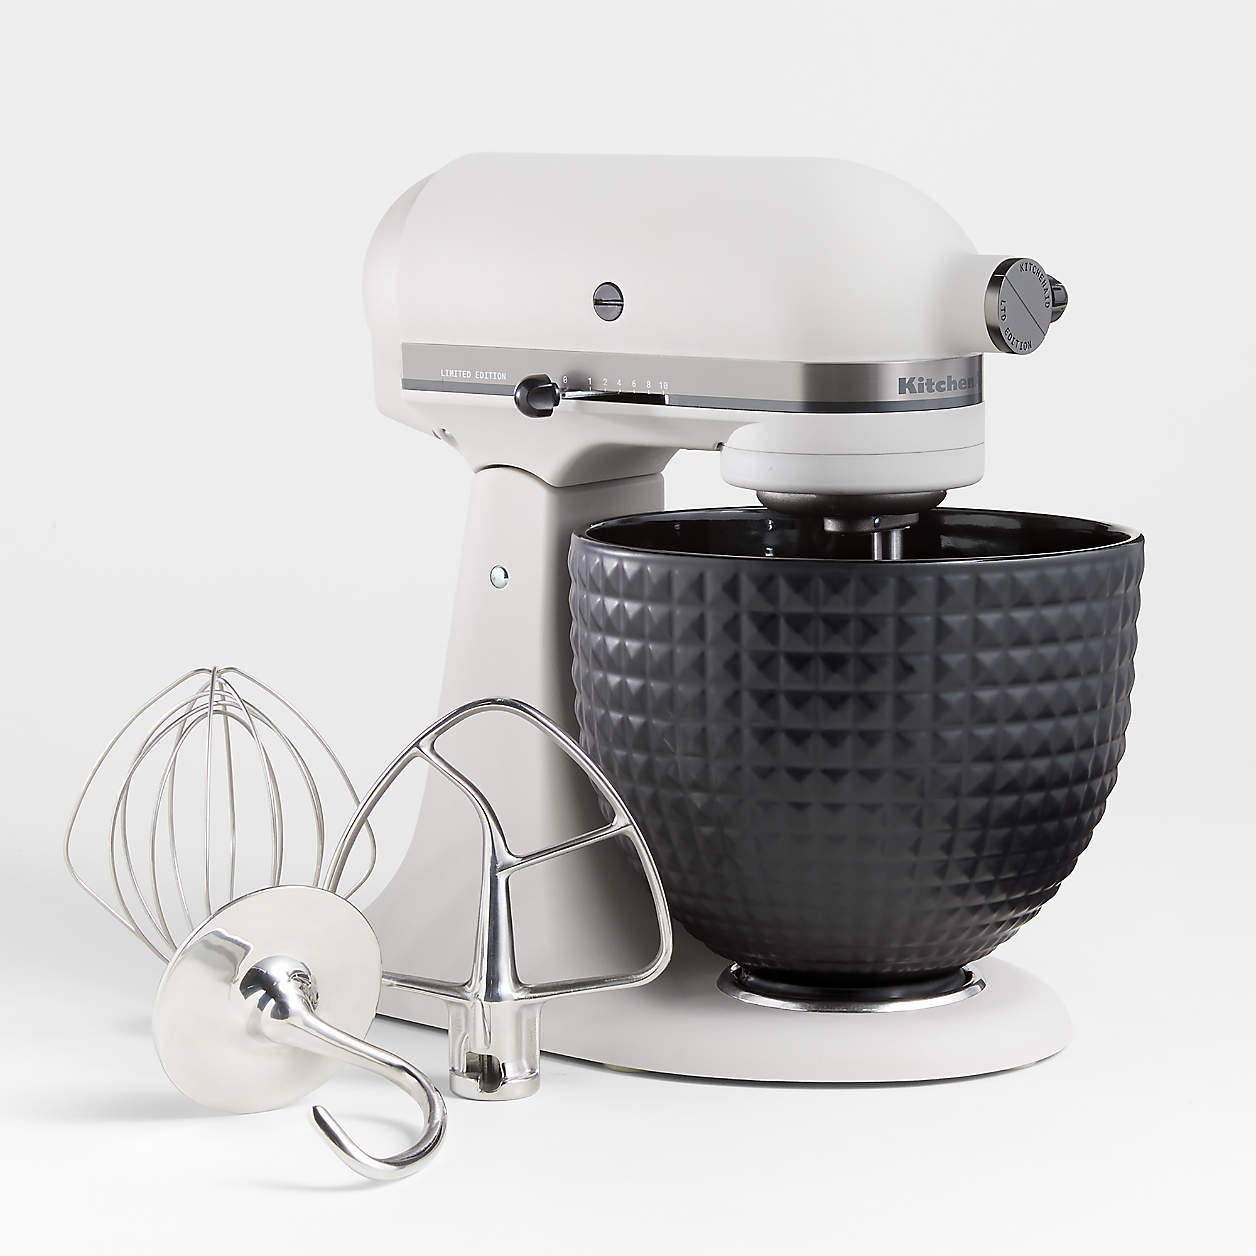 Kitchenaid Artisan Series 5 Quart Tilt Head Limited Edition Light And Shadow Stand Mixer With Black Ceramic Bowl 